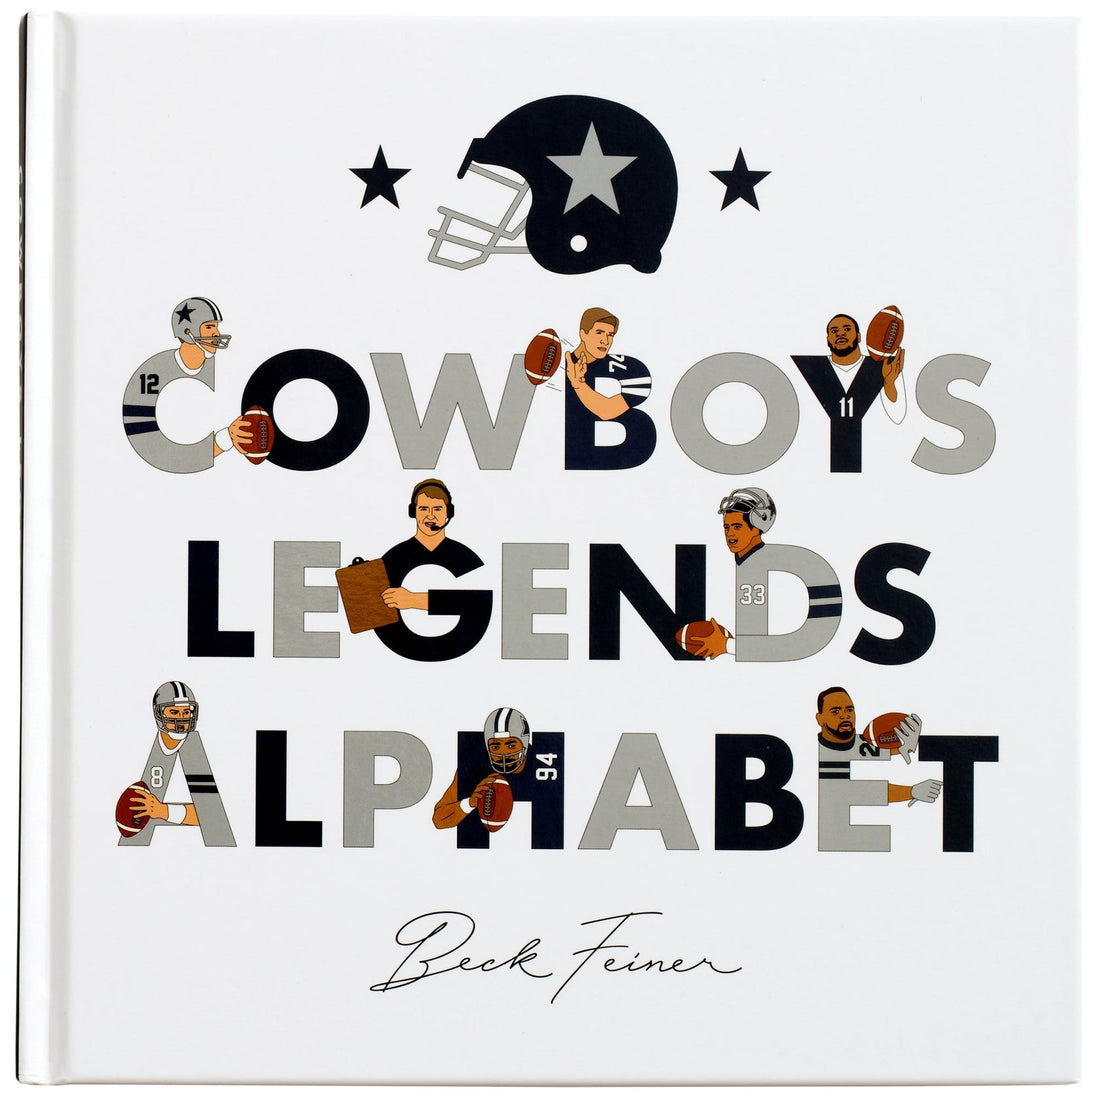 Alphabet legends Cowboy Legends Book